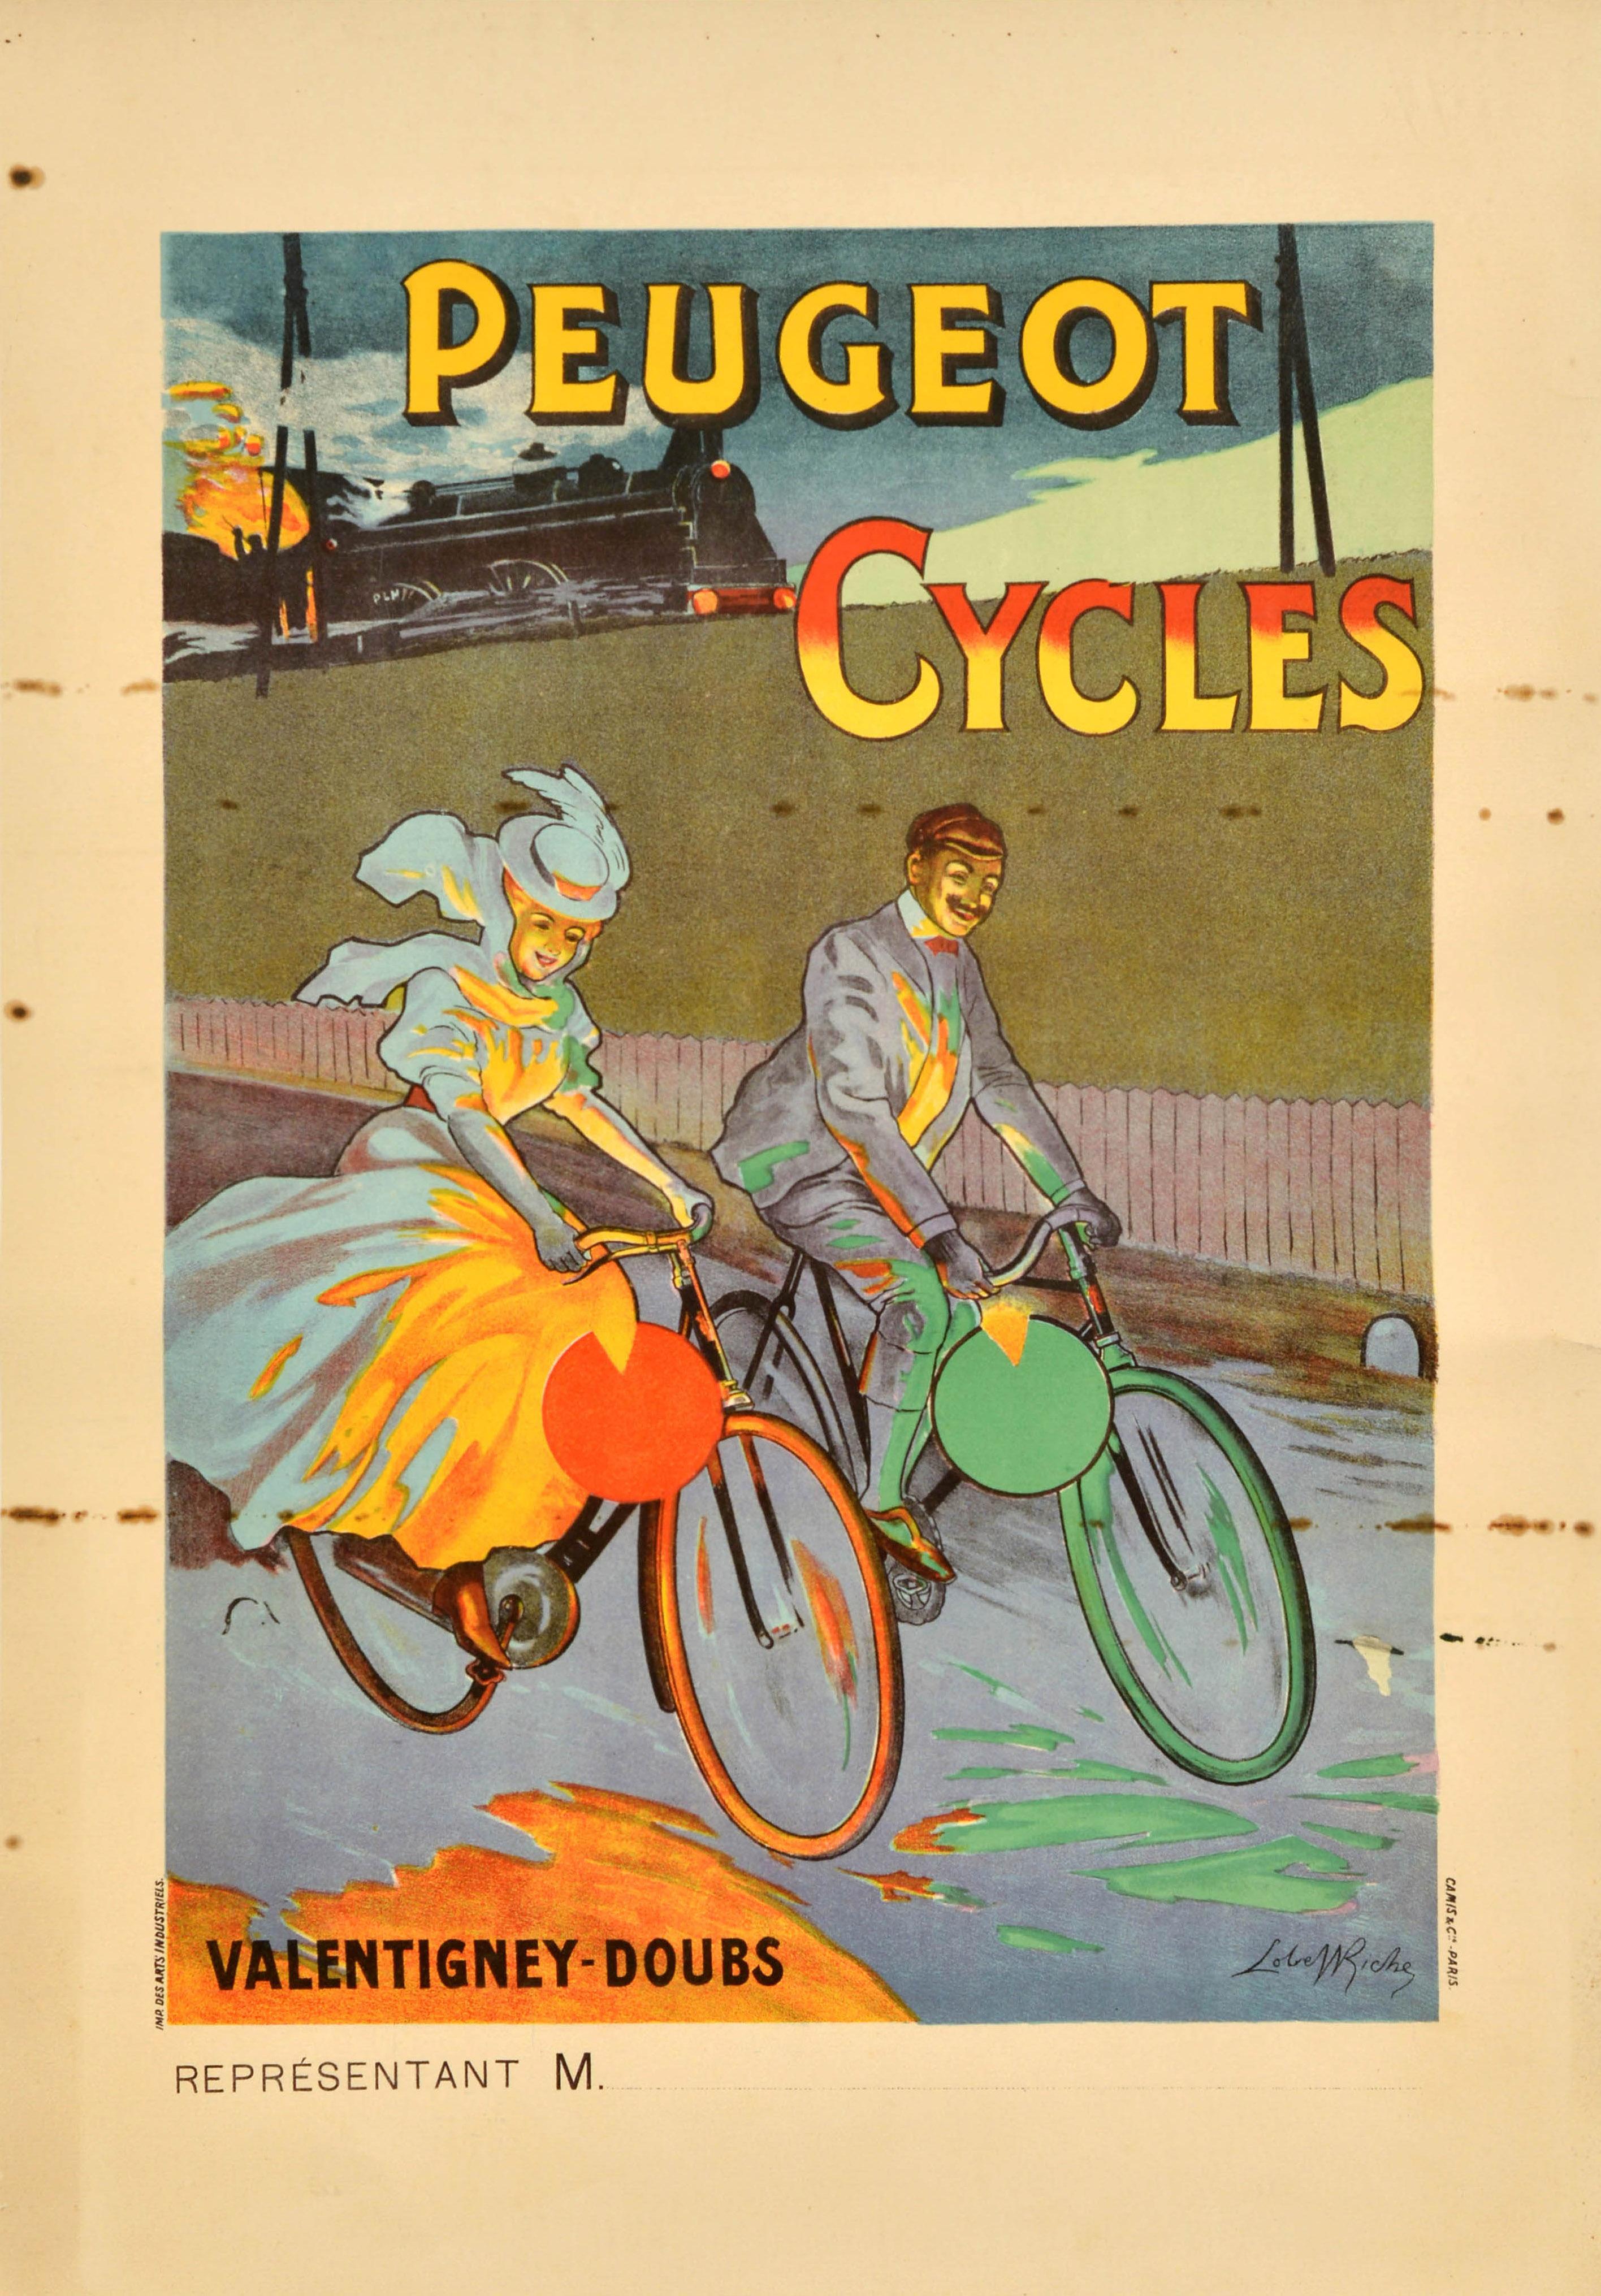 Almery Lobel-Riche Print – Original Antikes Werbeplakat Peugeot Cycles Valentigney Doubs, Werbeplakat für Fahrrad